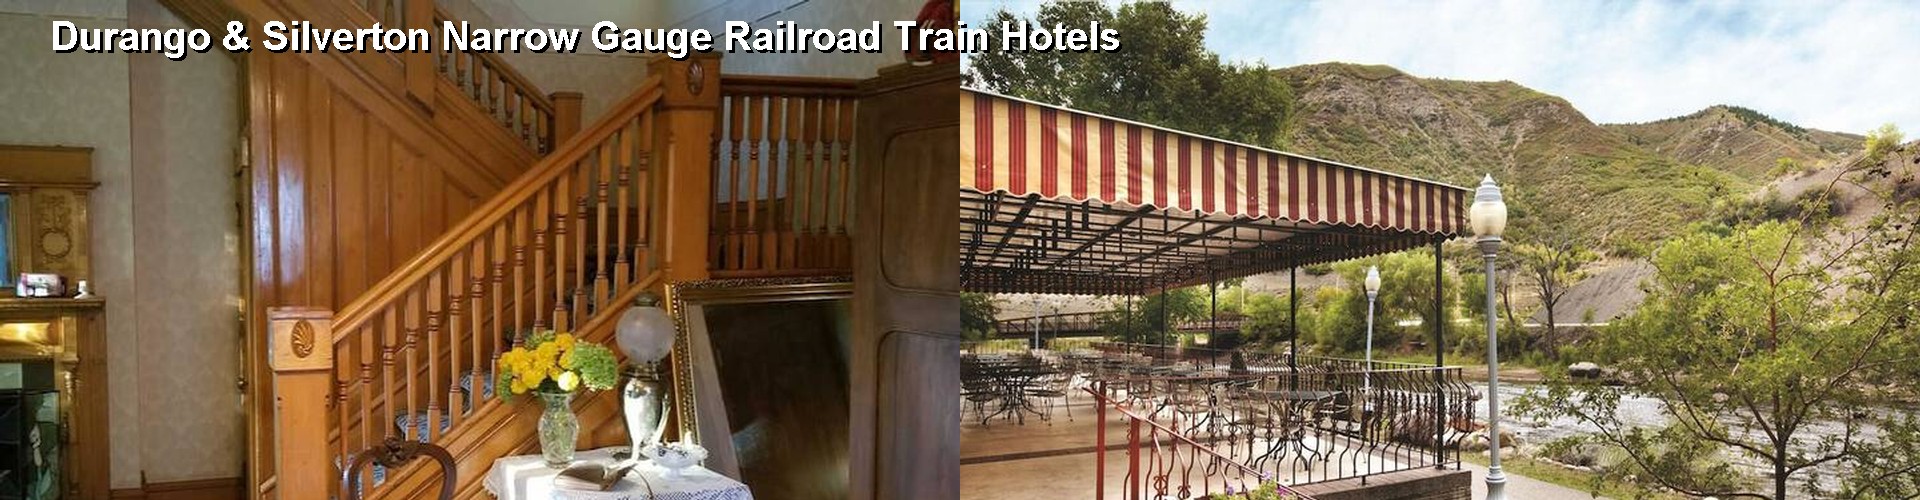 5 Best Hotels near Durango & Silverton Narrow Gauge Railroad Train